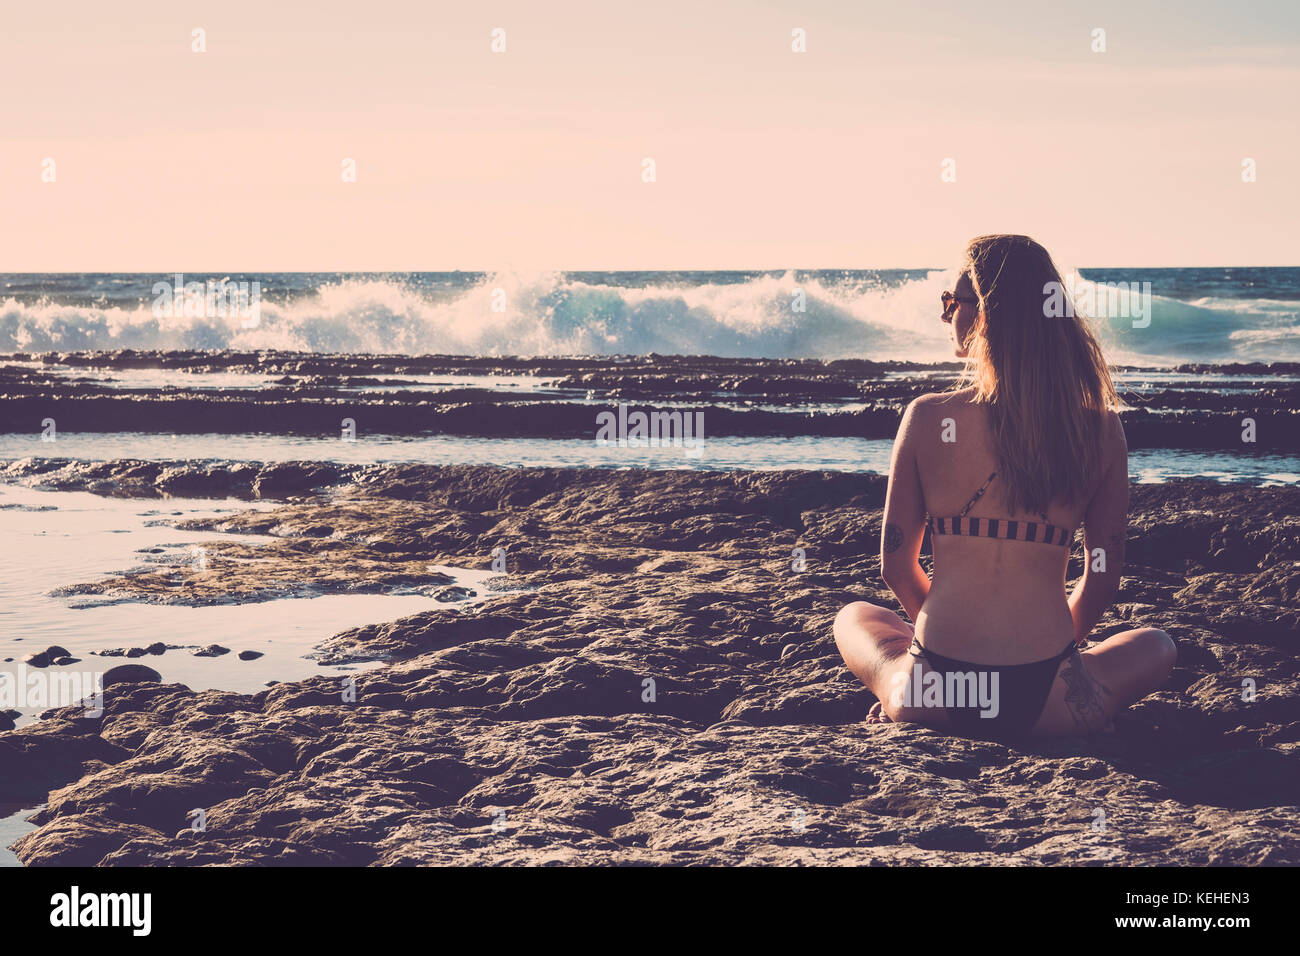 Caucasian woman sitting on beach wearing bikini Stock Photo